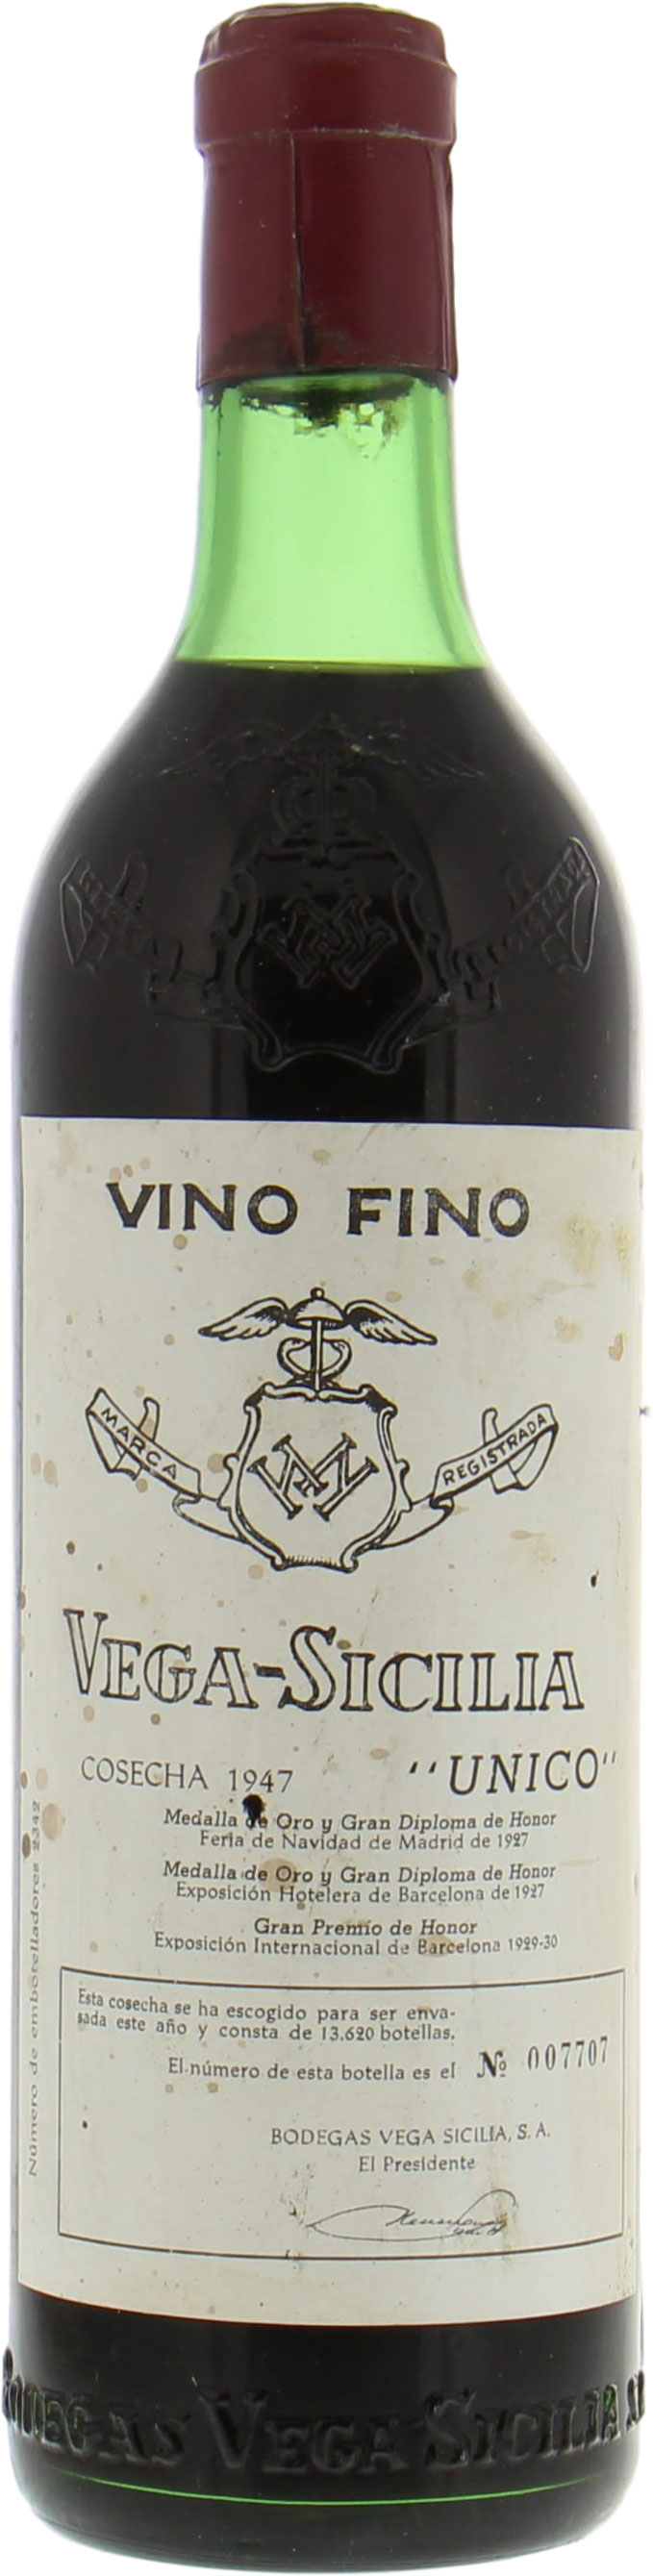 Vega Sicilia - Unico 1947 Top shoulder, from the private cellar of the former cellar master of Vega Sicilia